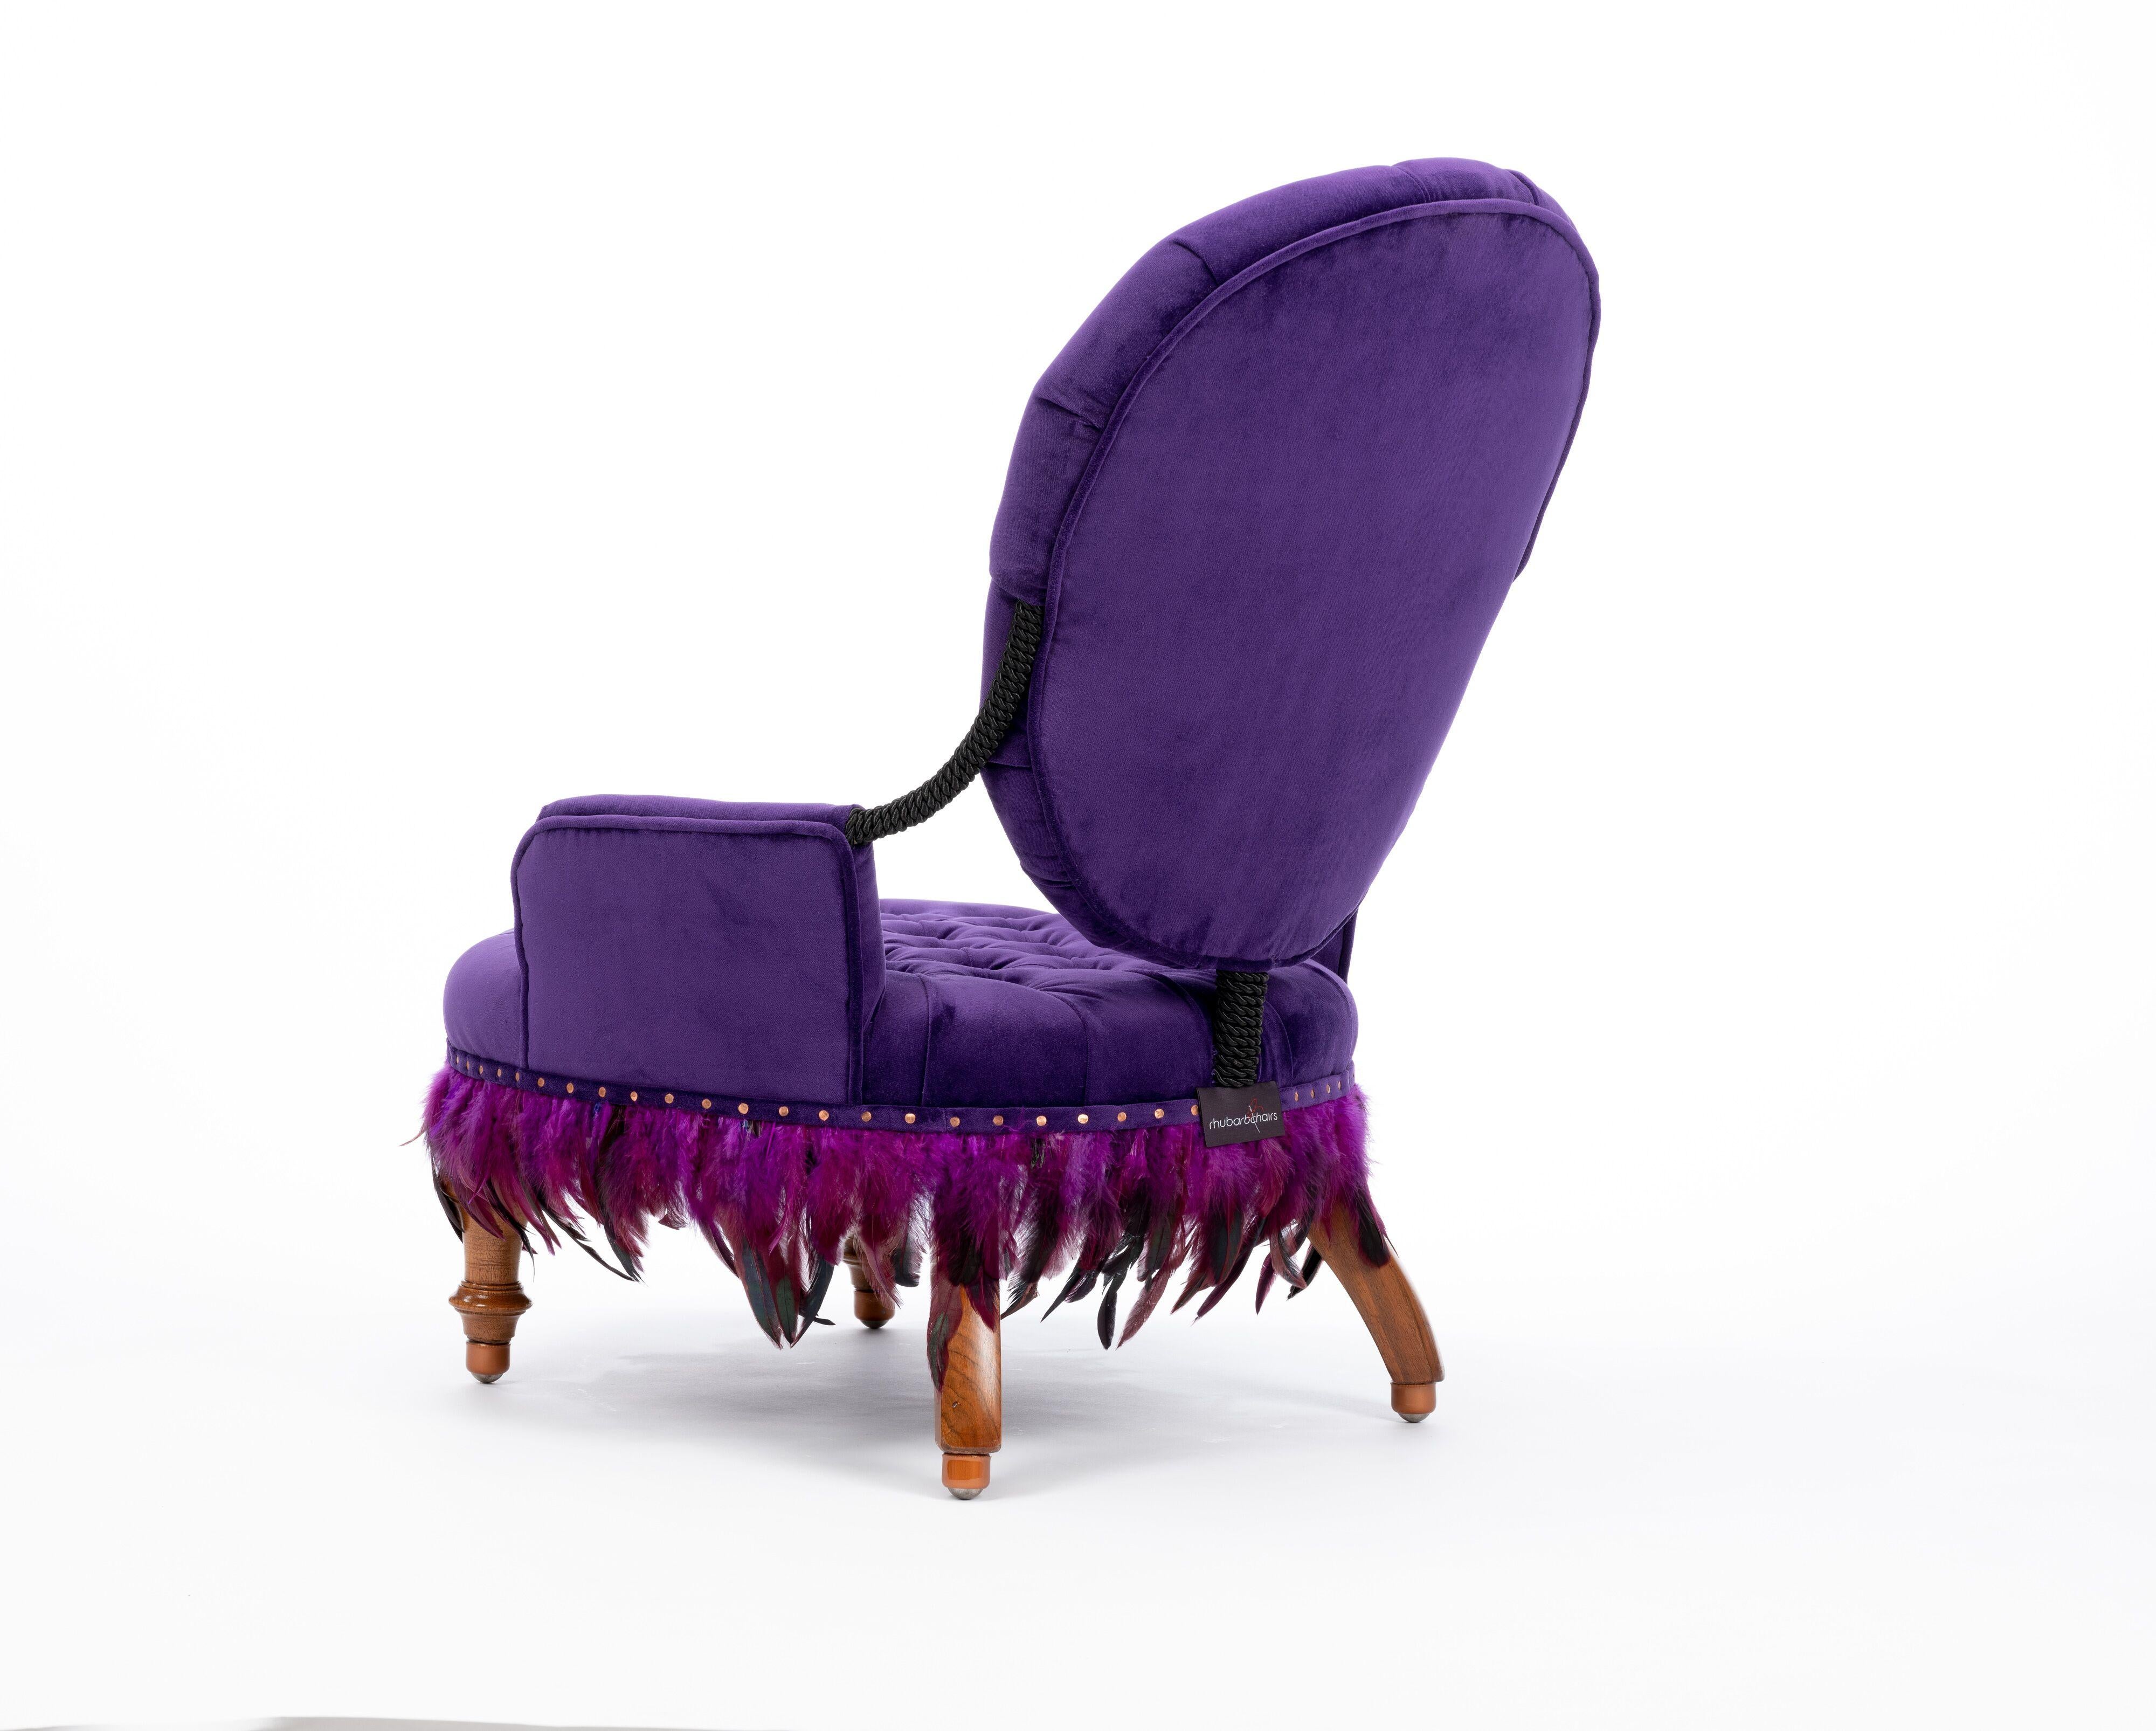 Late 19th Century Antique Salon Chair Purple Reign Burlesque Chair, France, circa 1875